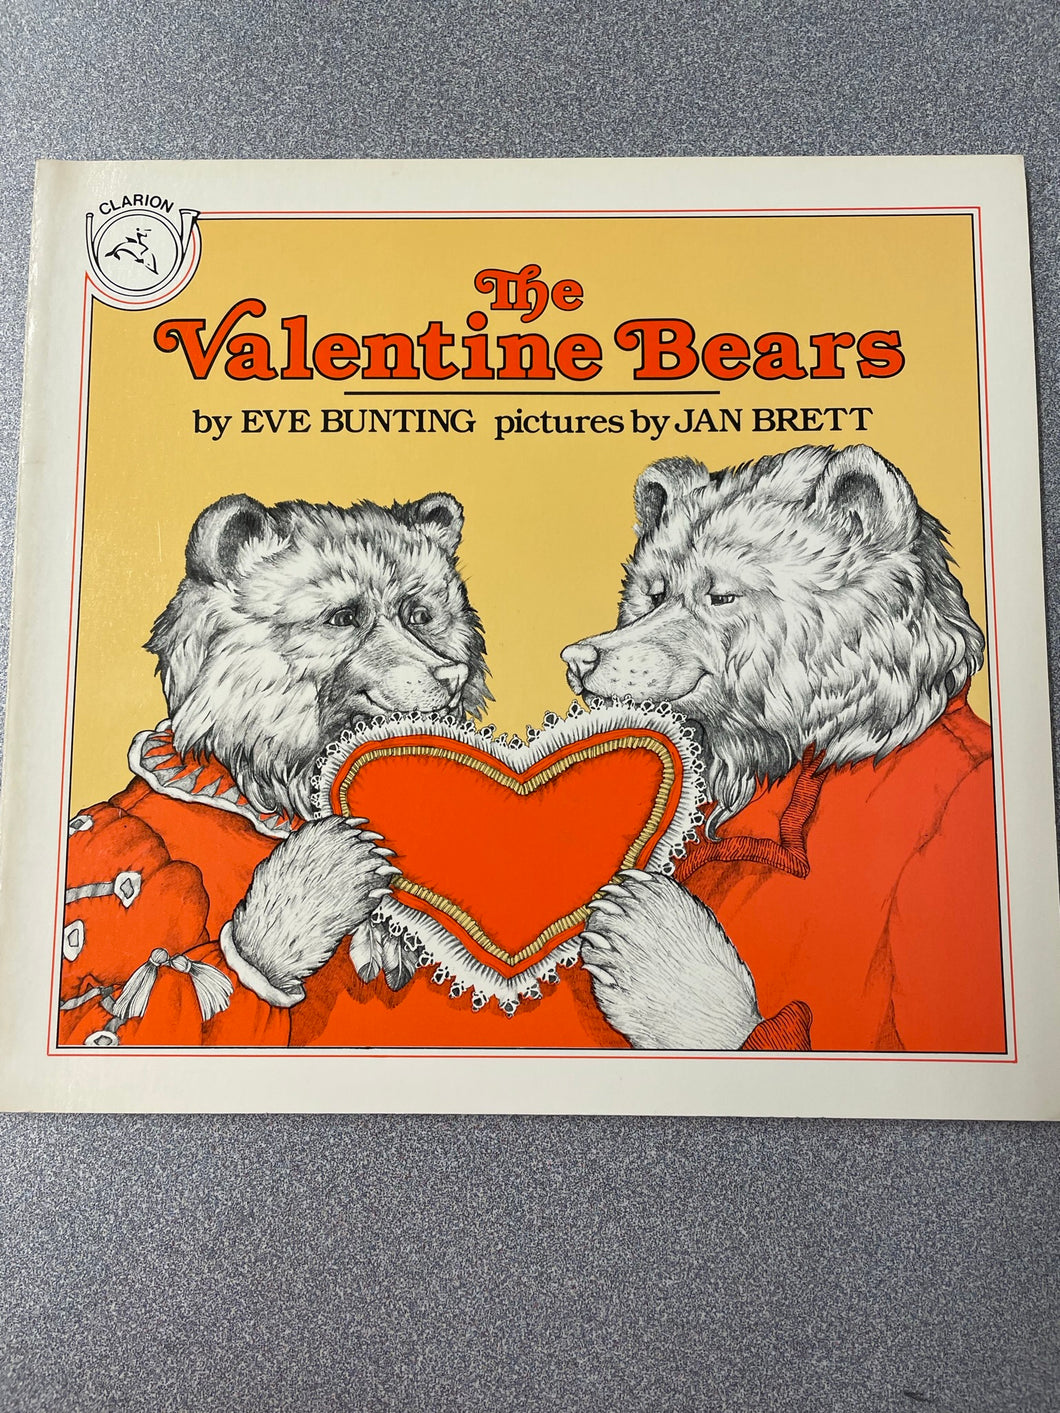 Bunting, Eve, The Valentine Bears [1983] IJB 5/23